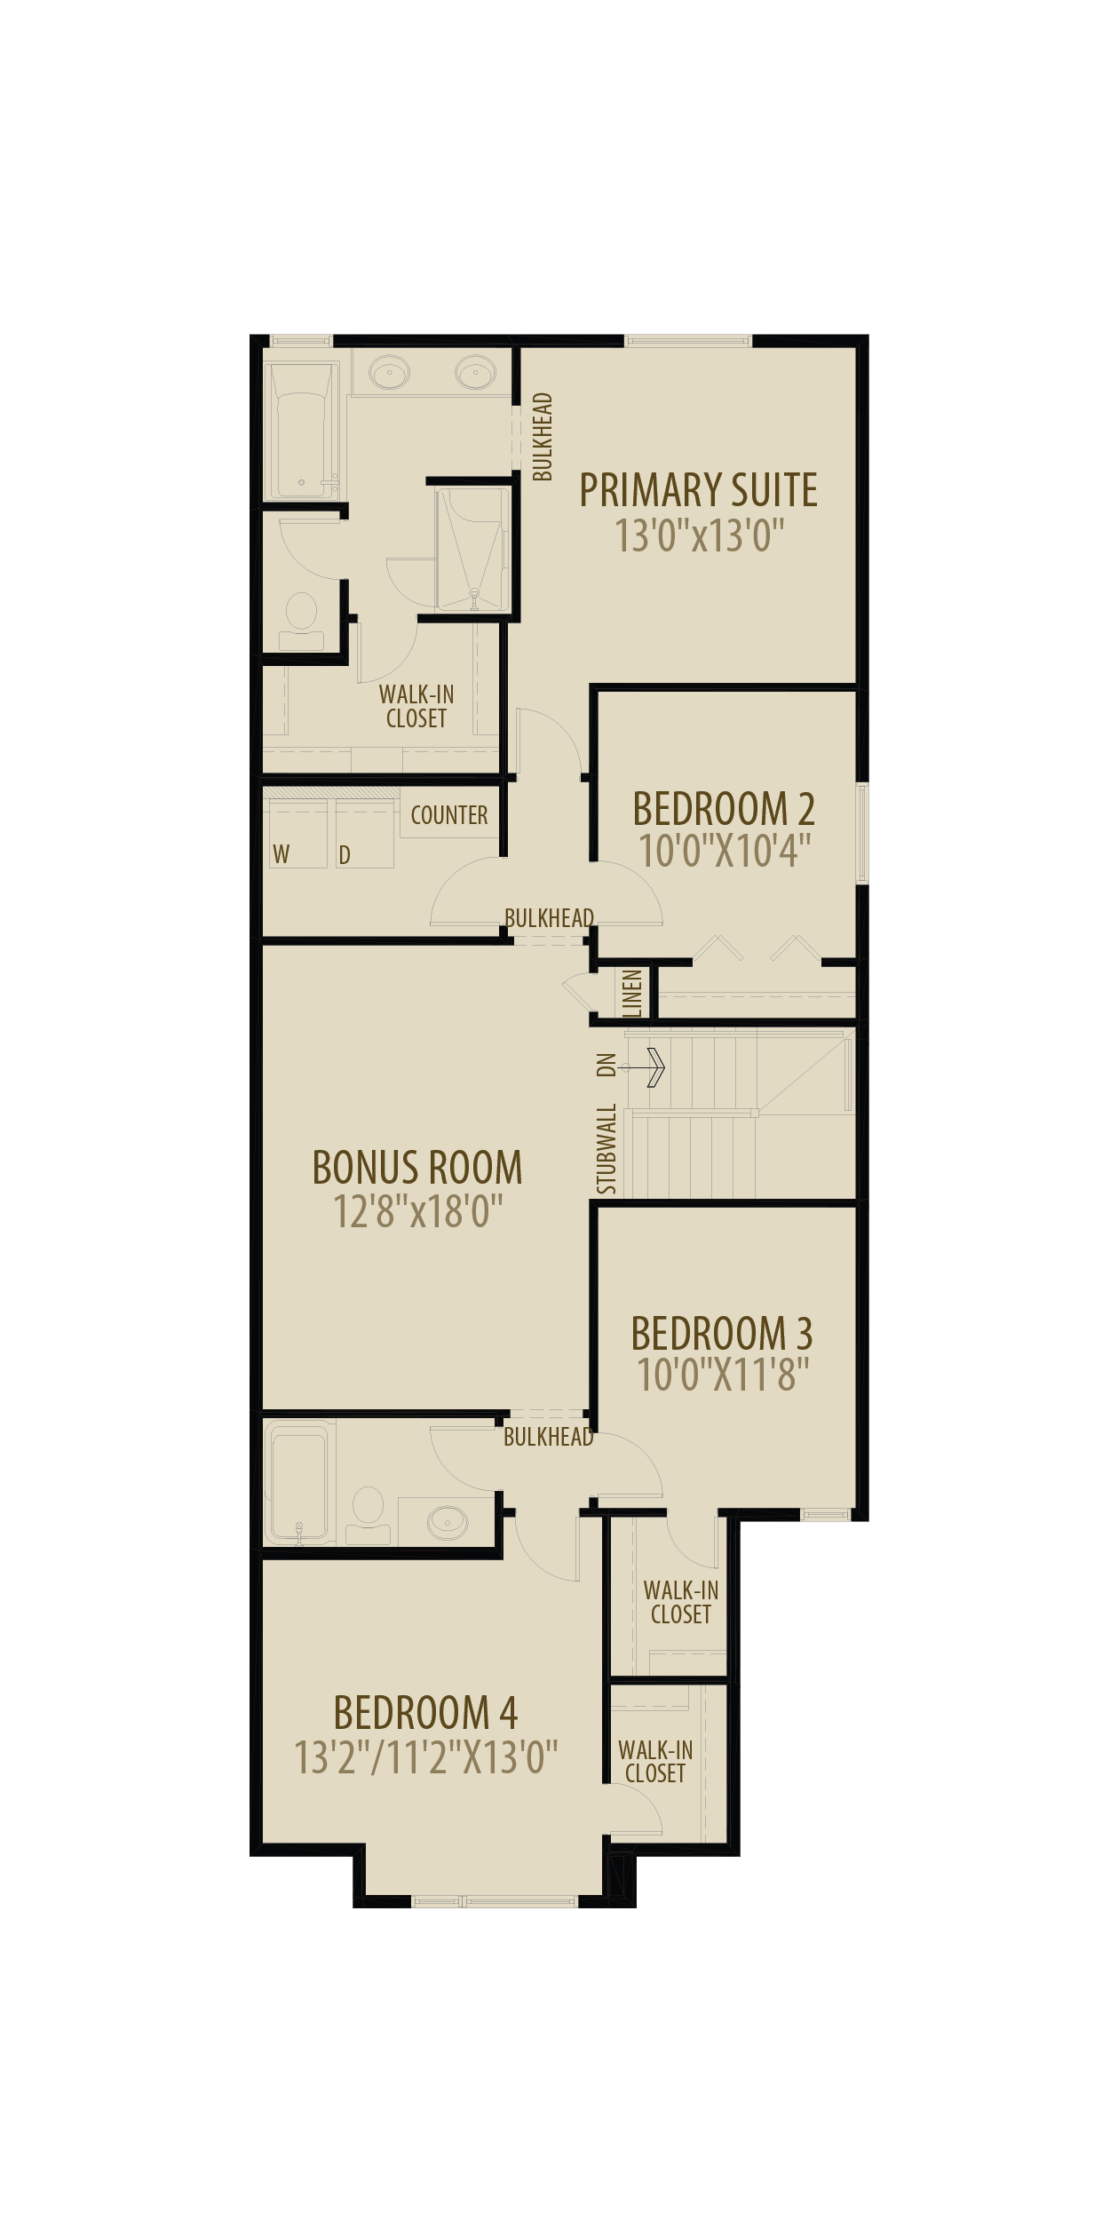 4th Bedroom Central Bonus Room adds 248 sq ft